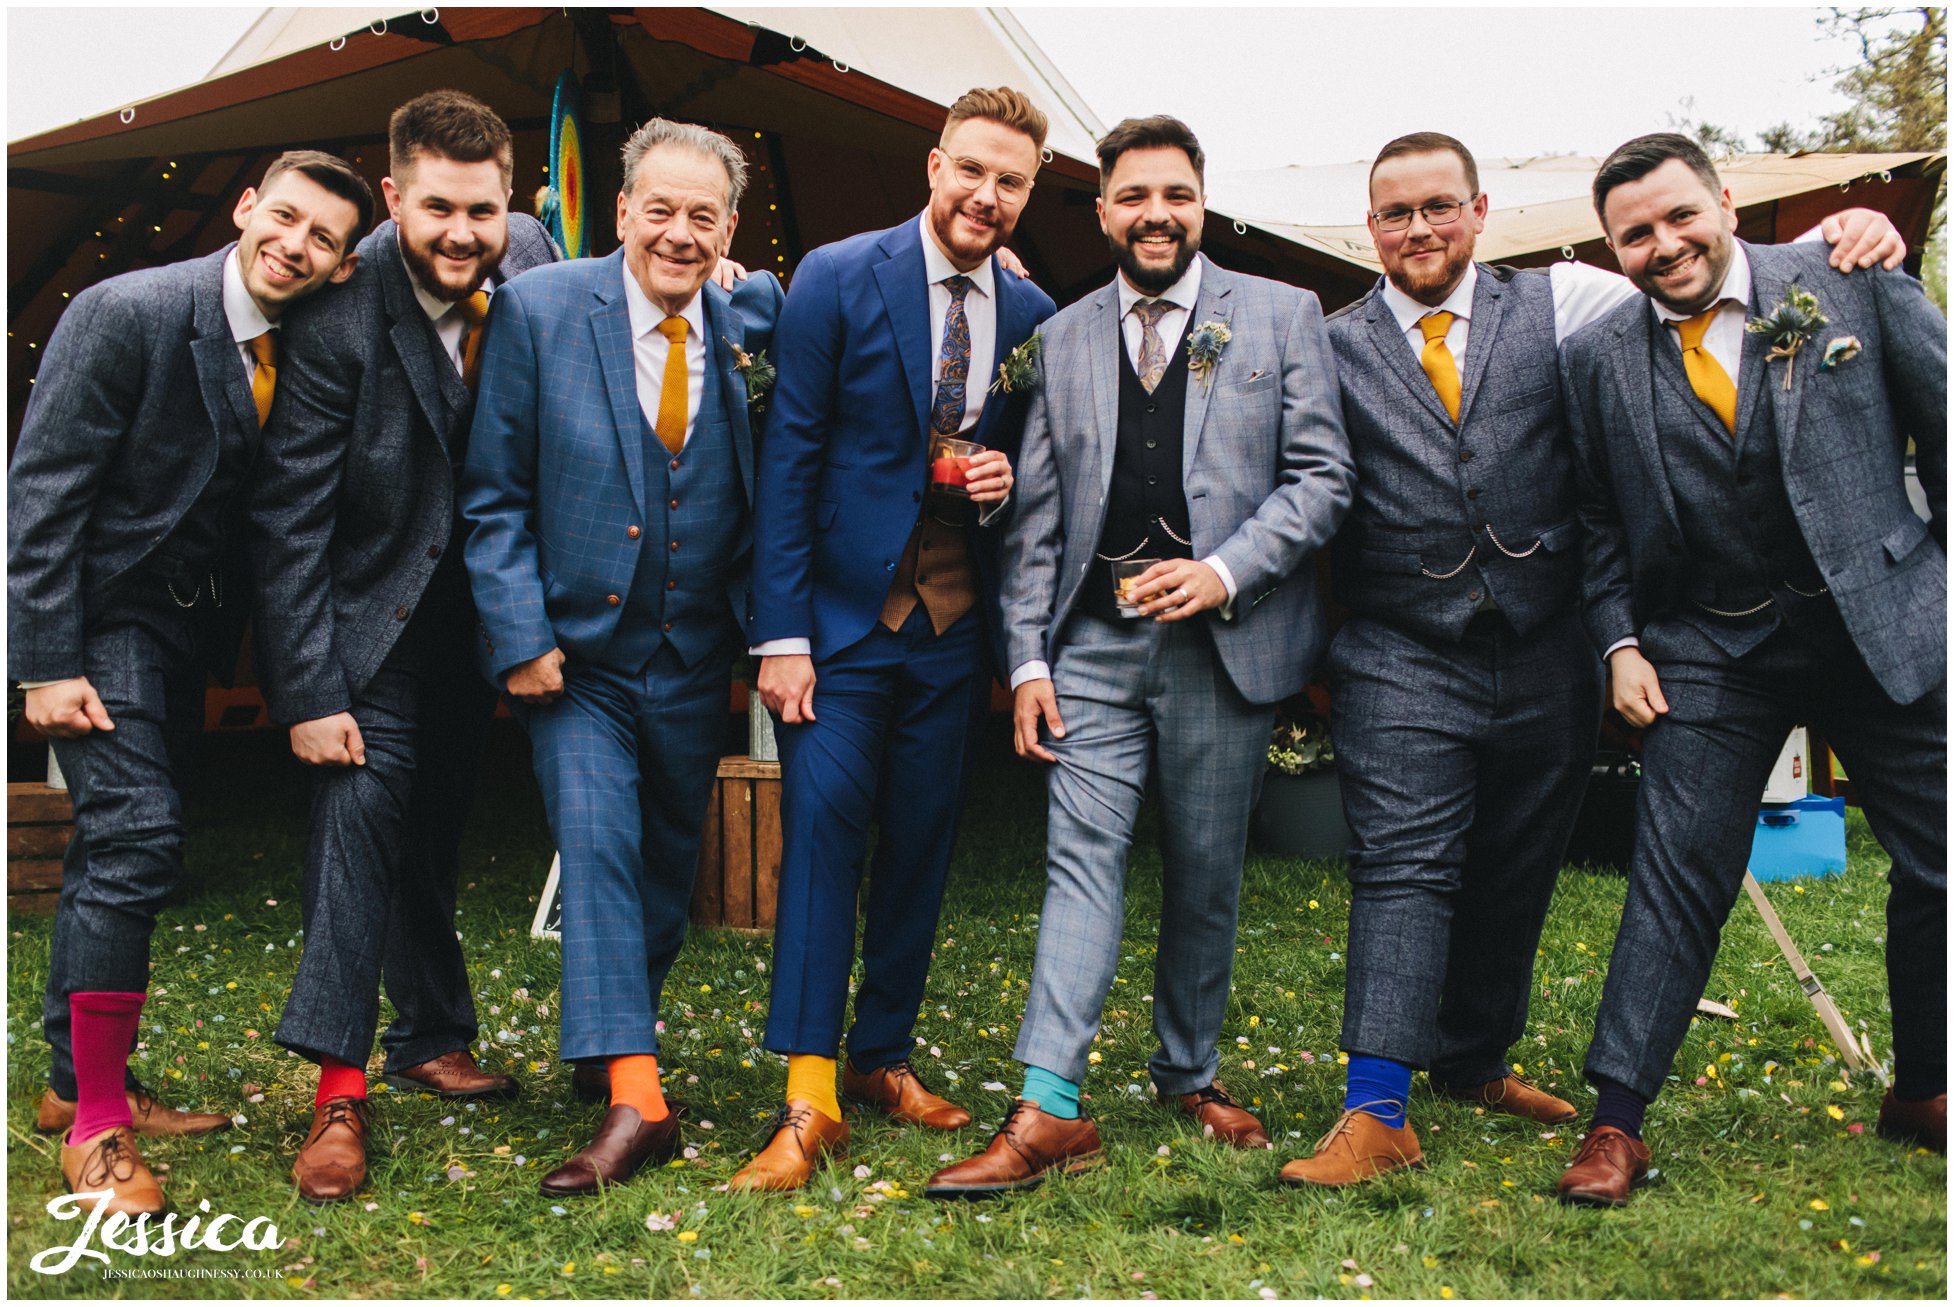 the grooms &amp; groomsmen show off their rainbow socks